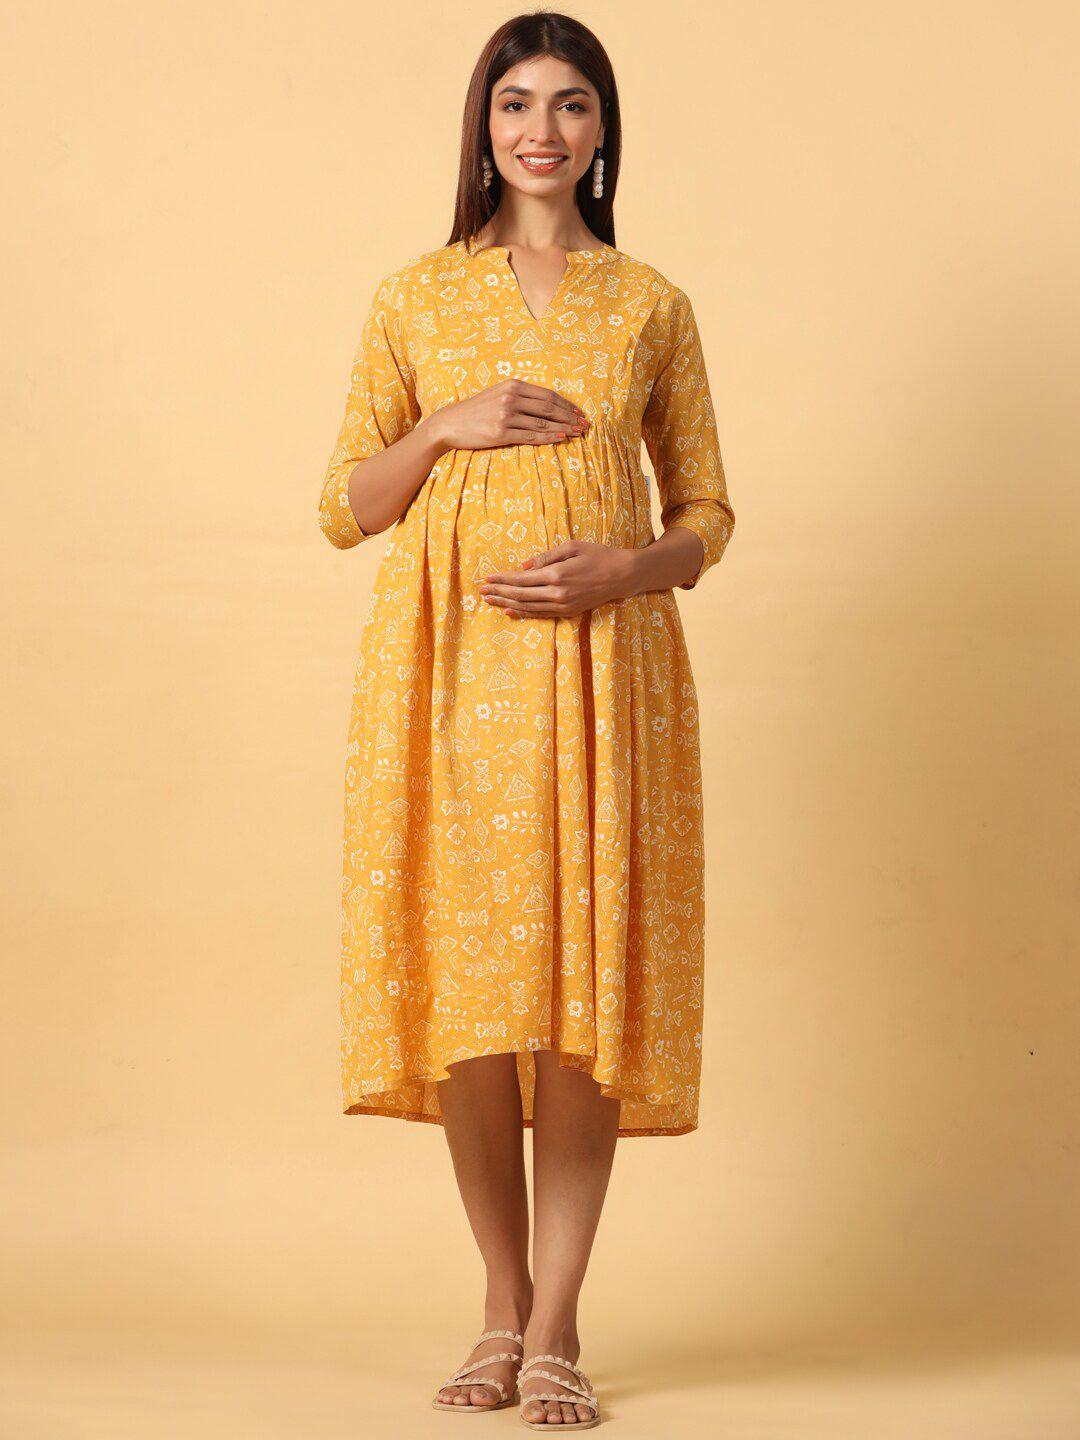 crafiqa mustard yellow ethnic motifs print maternity empire midi dress